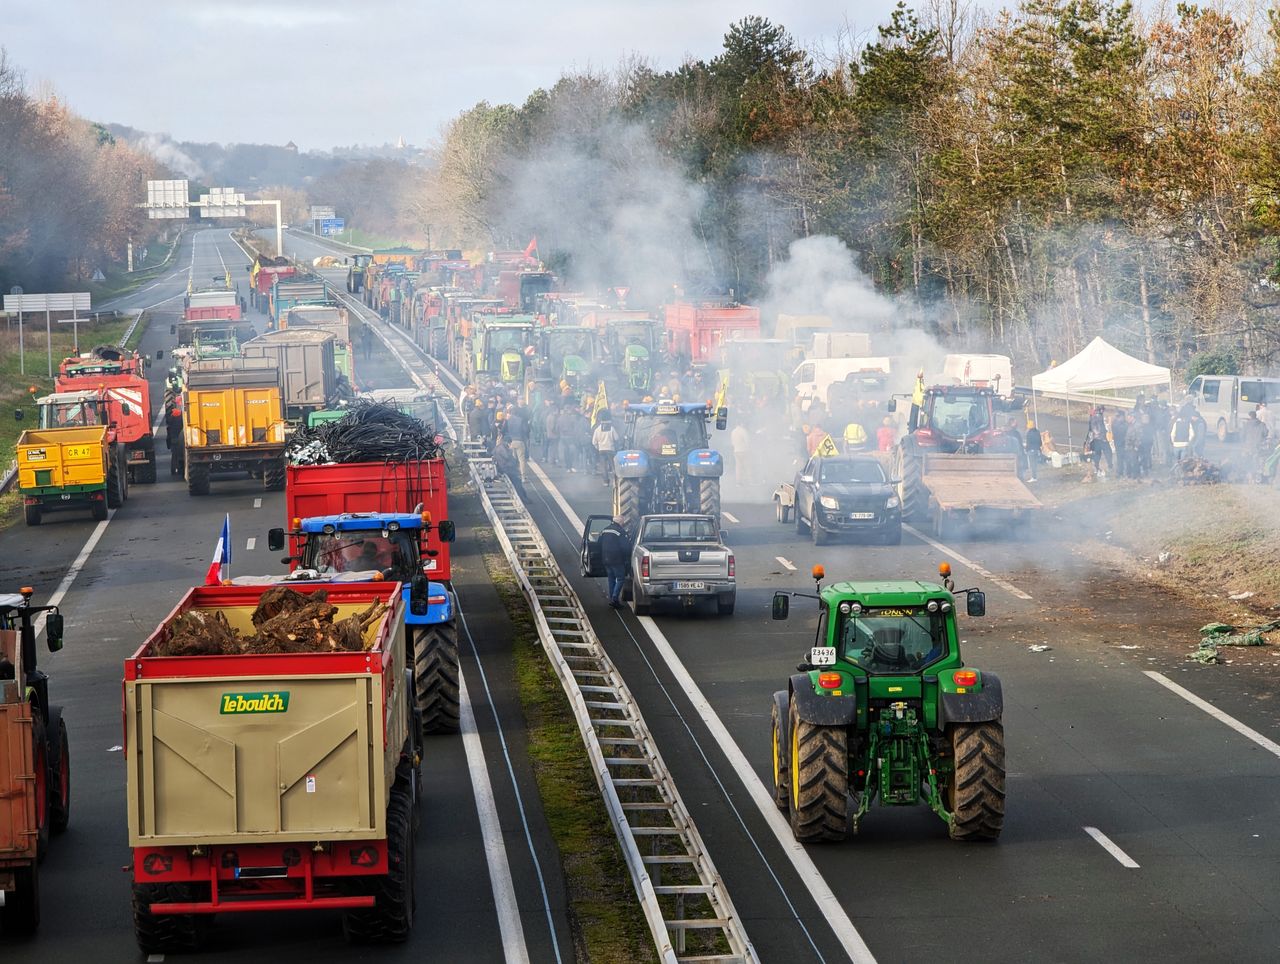 Farmers' protest in France takes tragic turn as woman dies in car crash at blockade